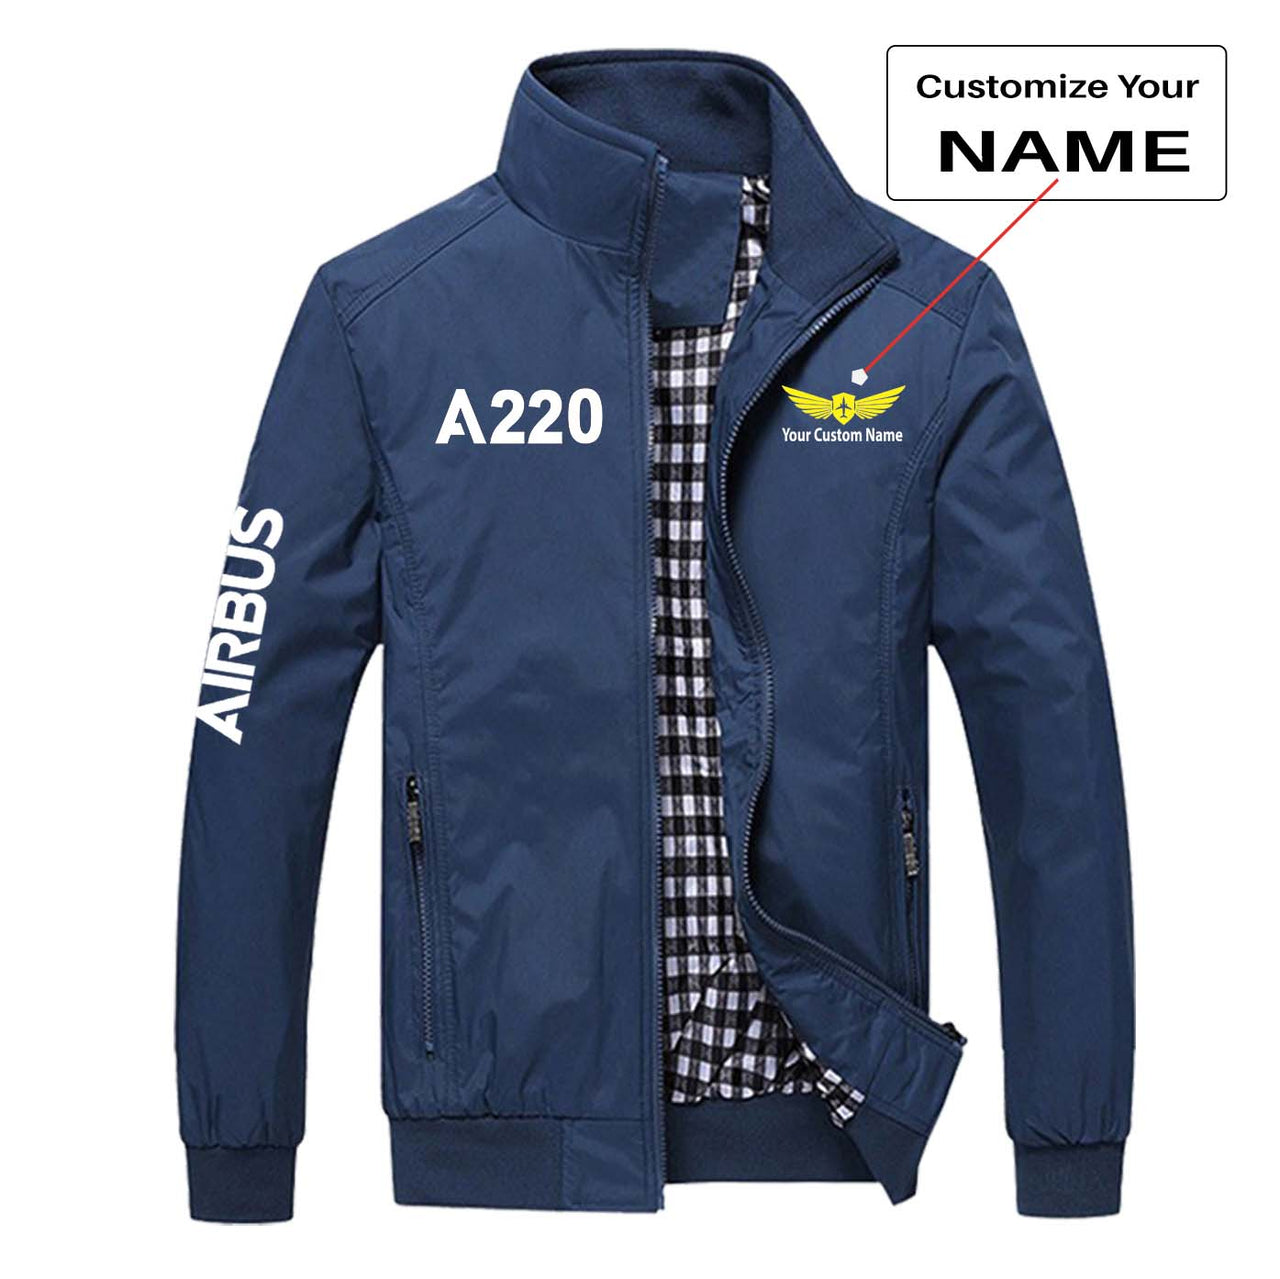 A220 Flat Text Designed Stylish Jackets